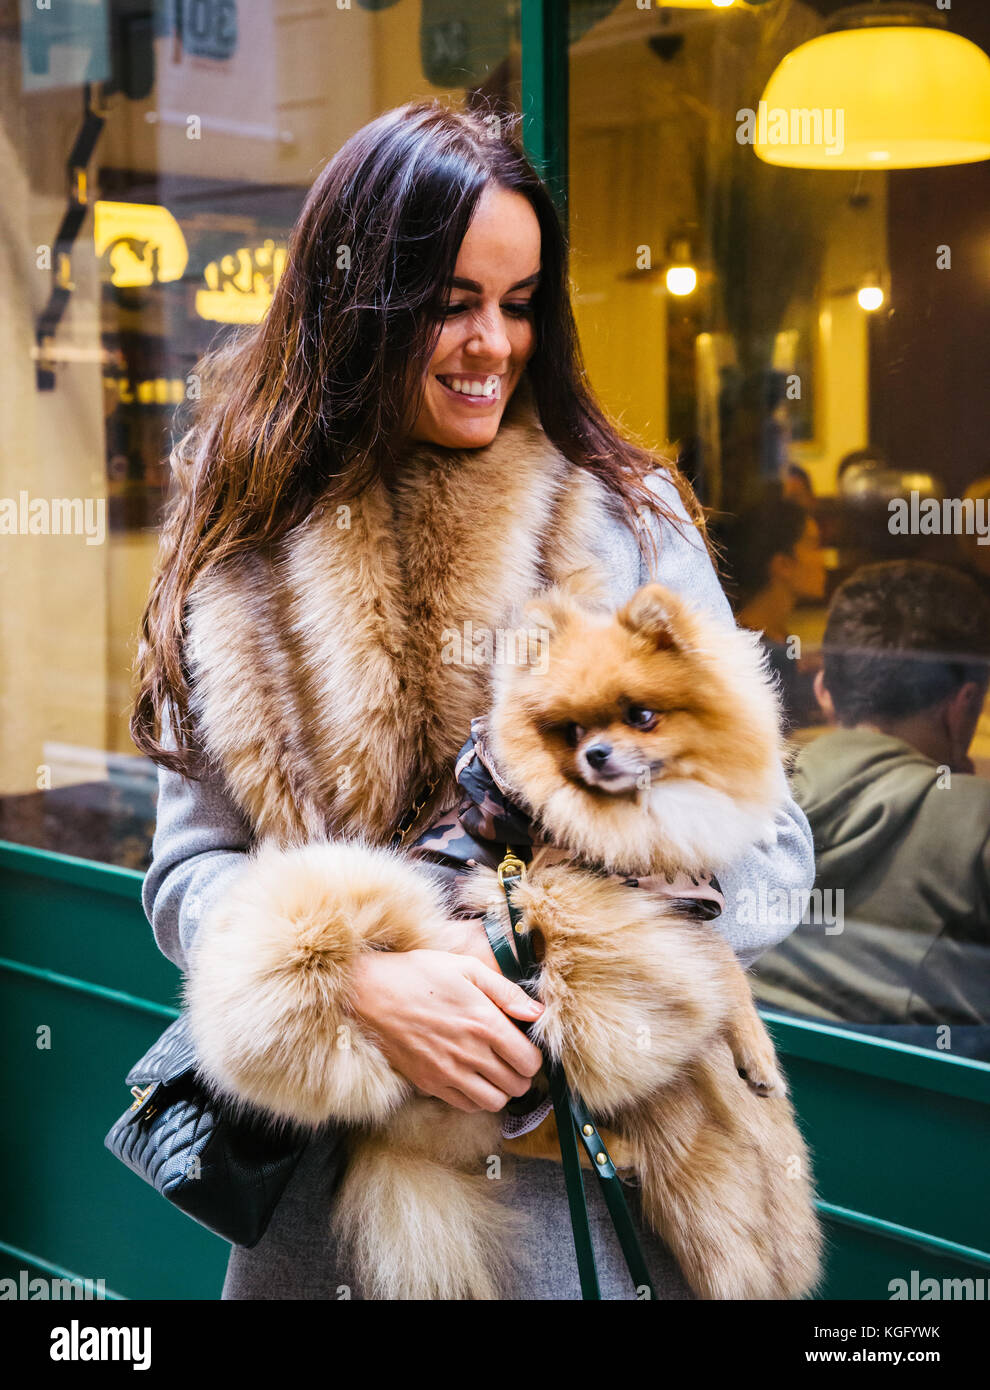 Portrait of woman smiling in fur coat, holding Pomeranian dog Stock Photo